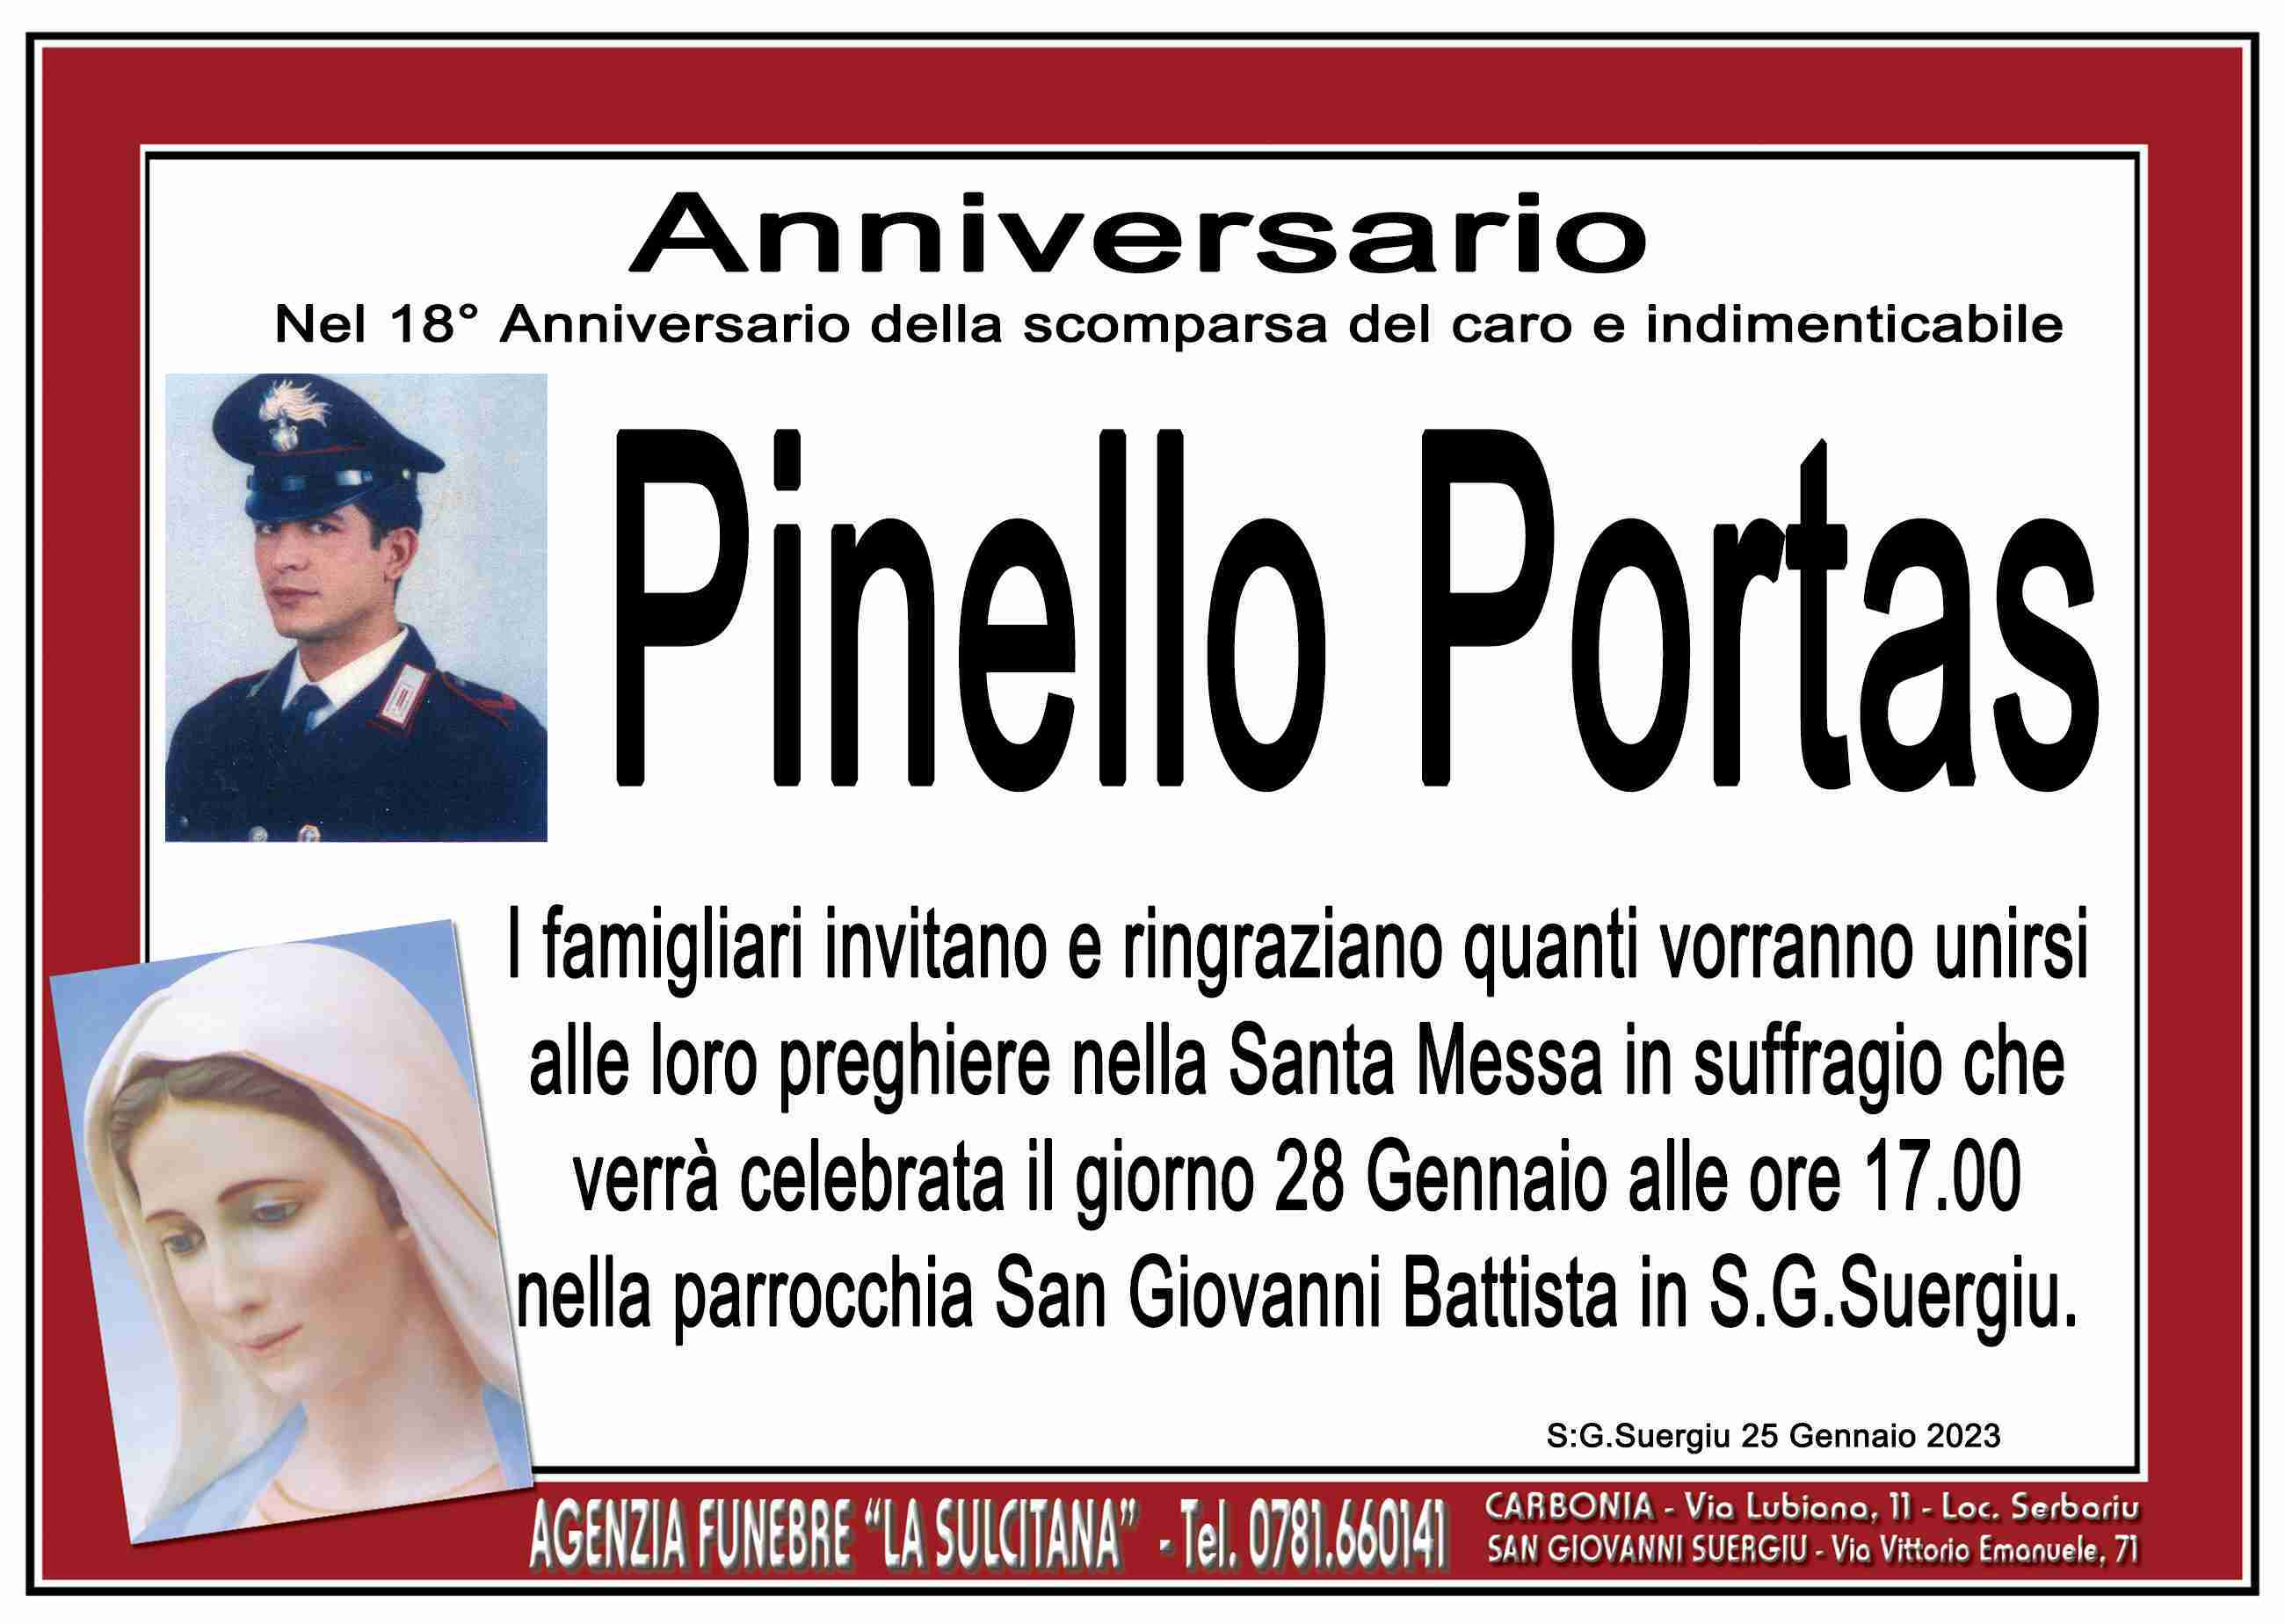 Pinello Portas